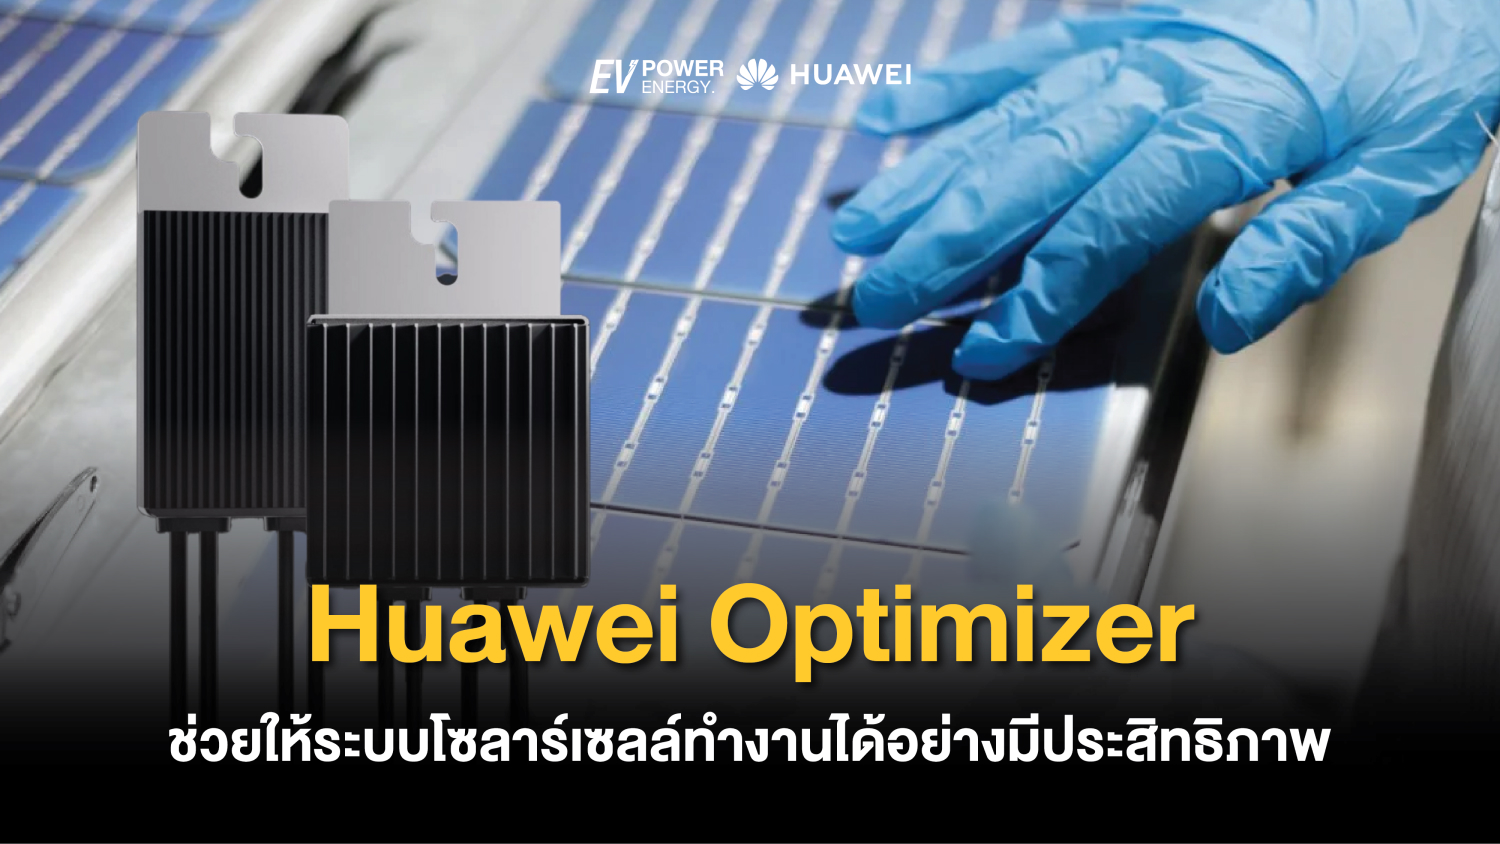 Huawei Optimizer ช่วยให้ระบบโซลาร์เซลล์ทำงานได้อย่างมีประสิทธิภาพ 1